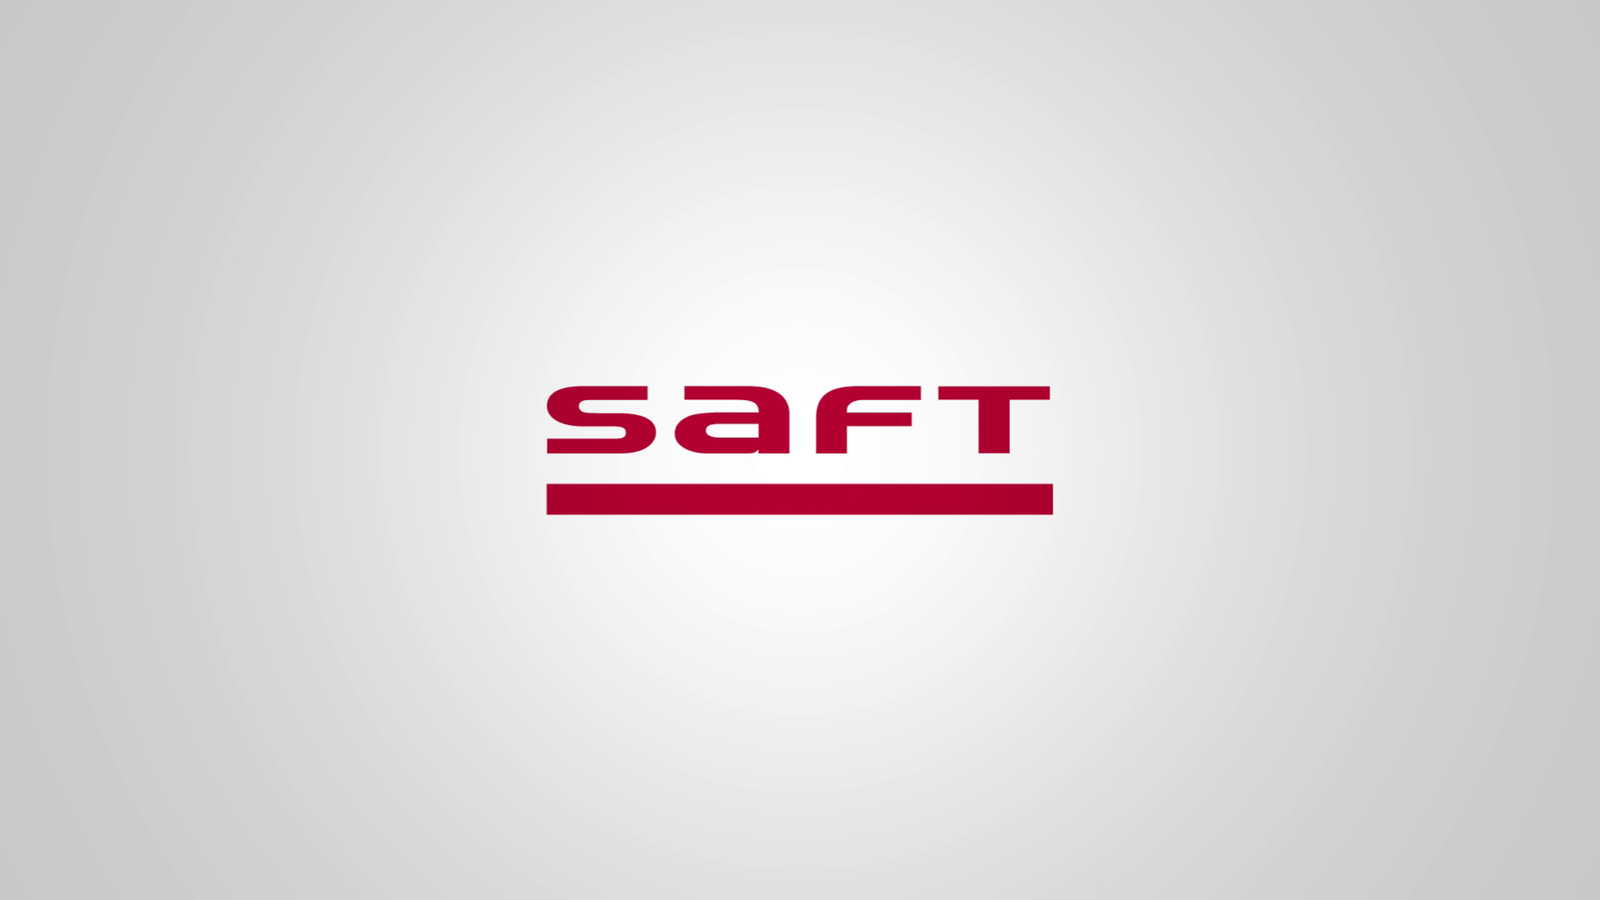 Saft_Intranet_Animation_SHORT_v1.0